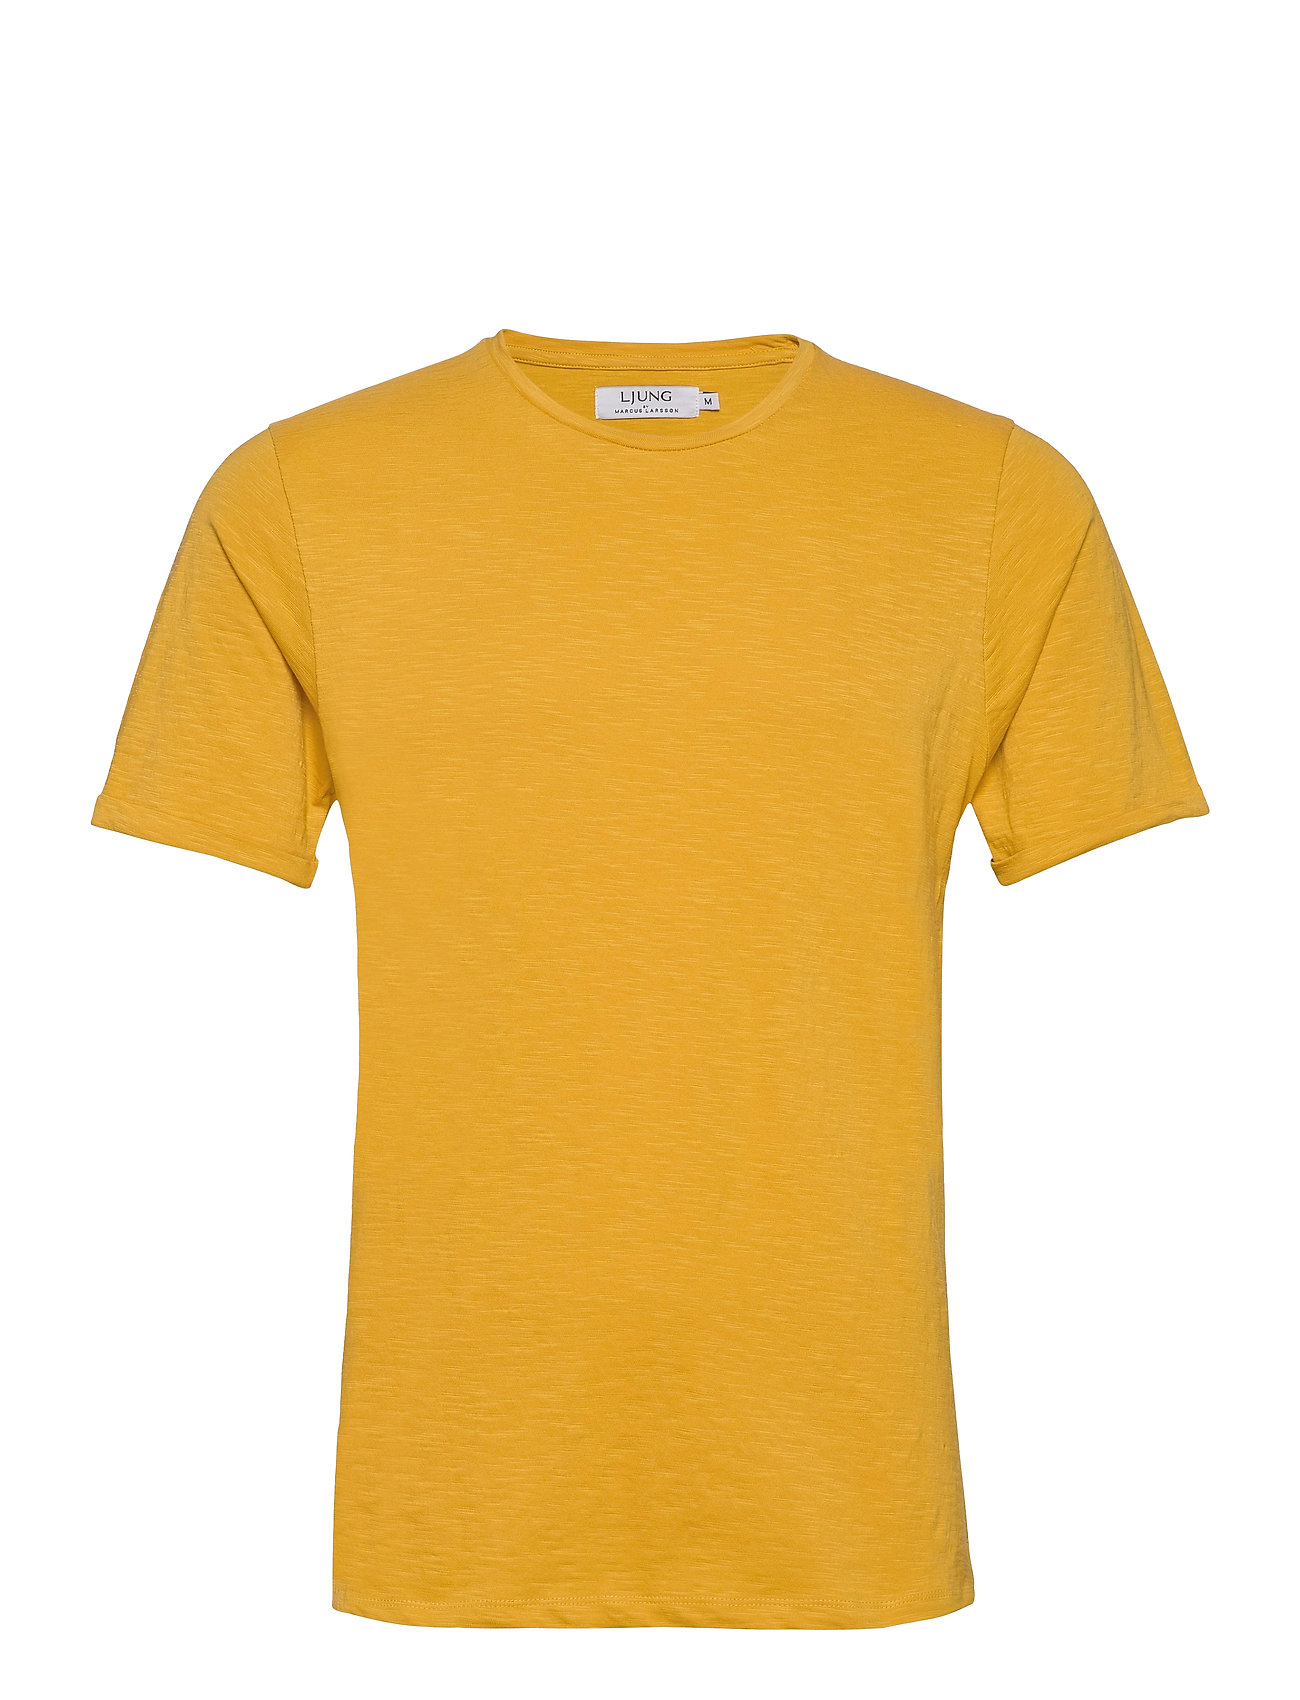 Core Tee T-shirts Short-sleeved Keltainen LJUNG By Marcus Larsson, LJUNG by Marcus Larsson